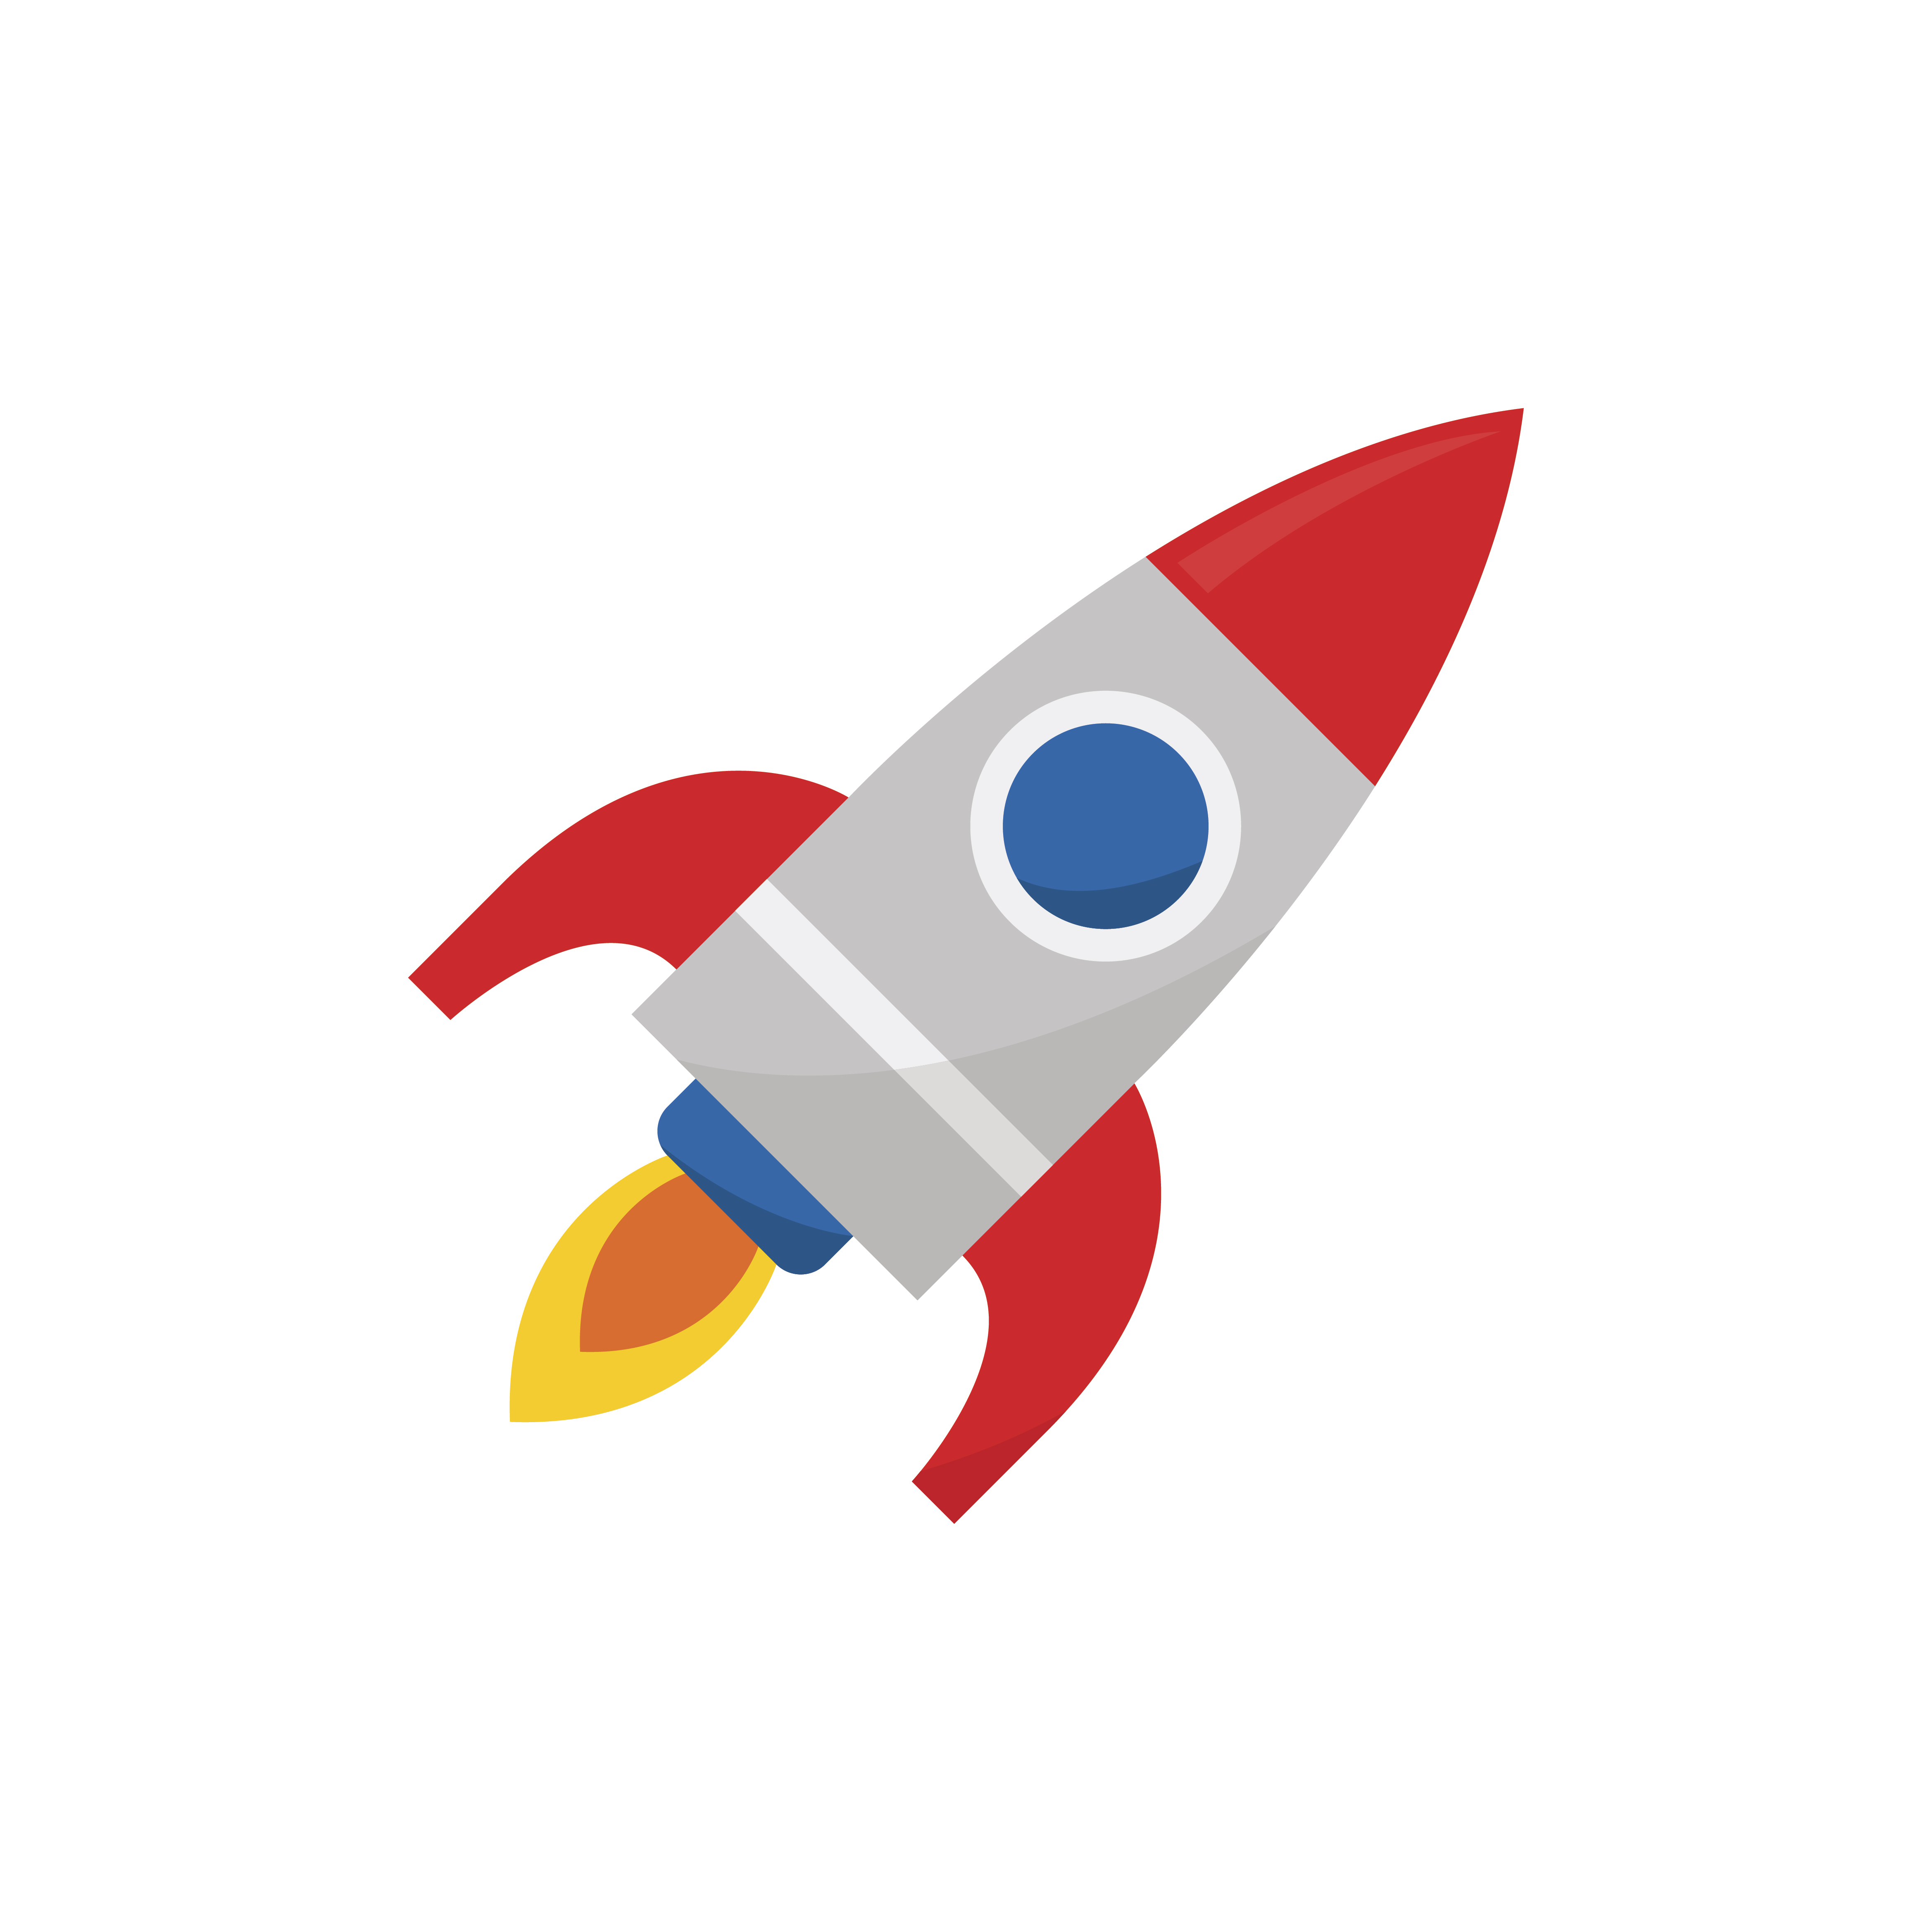 Illustration of a rocket icon Download Free Vectors